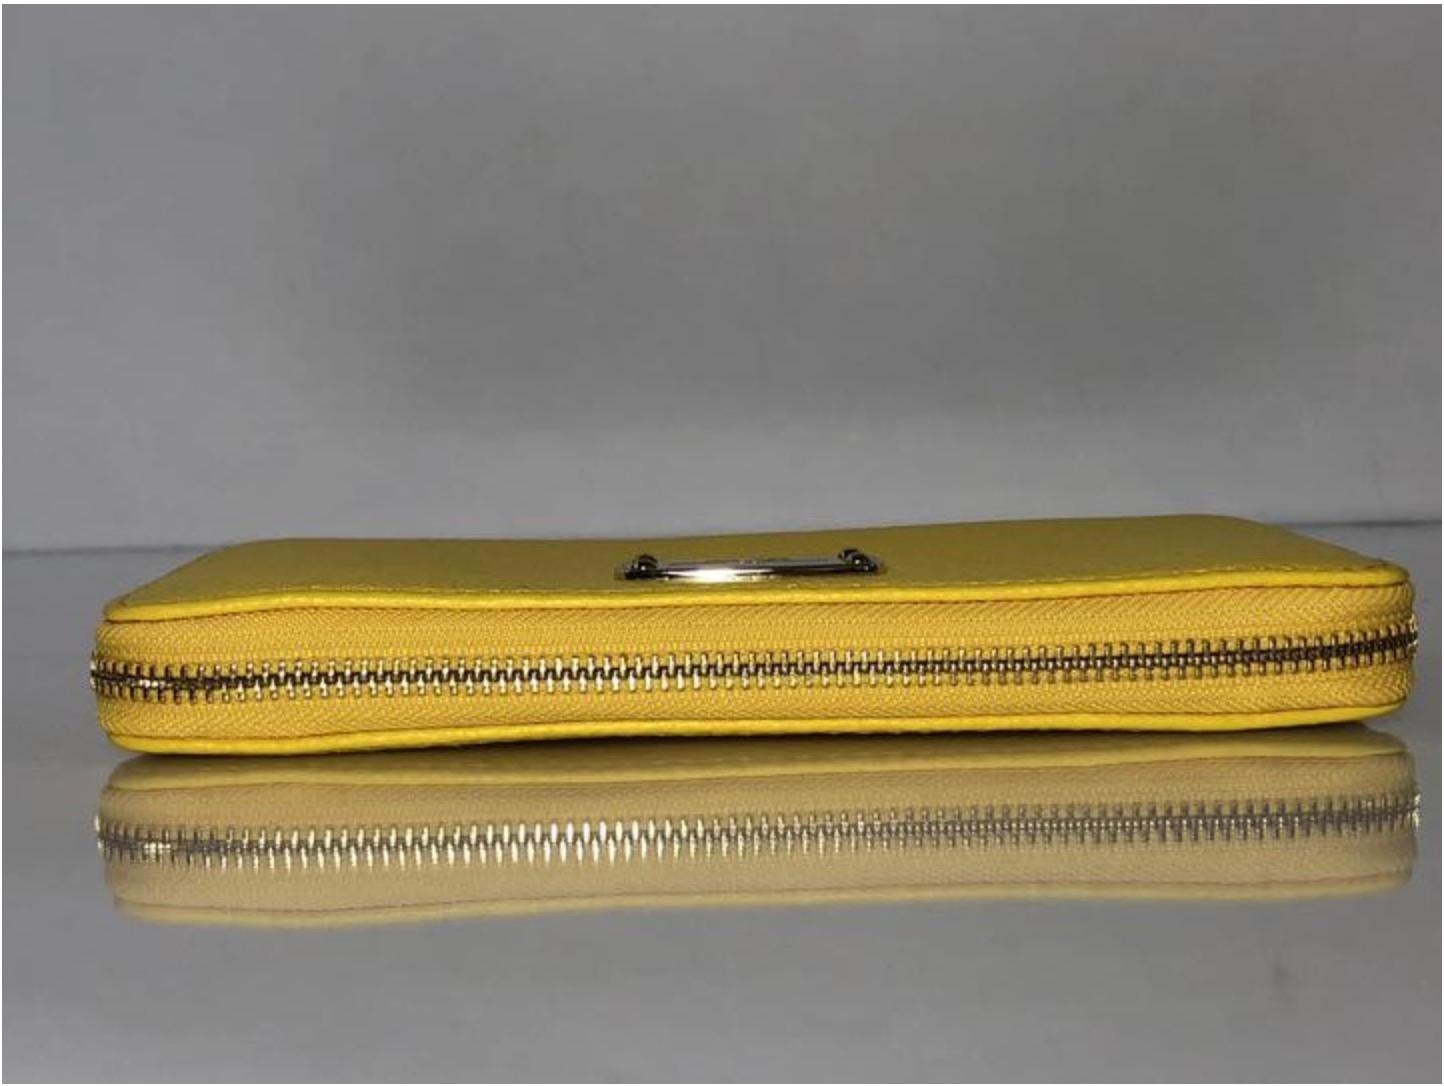 Michael Kors Leather Long Zipper Wallet in Yellow For Sale 3